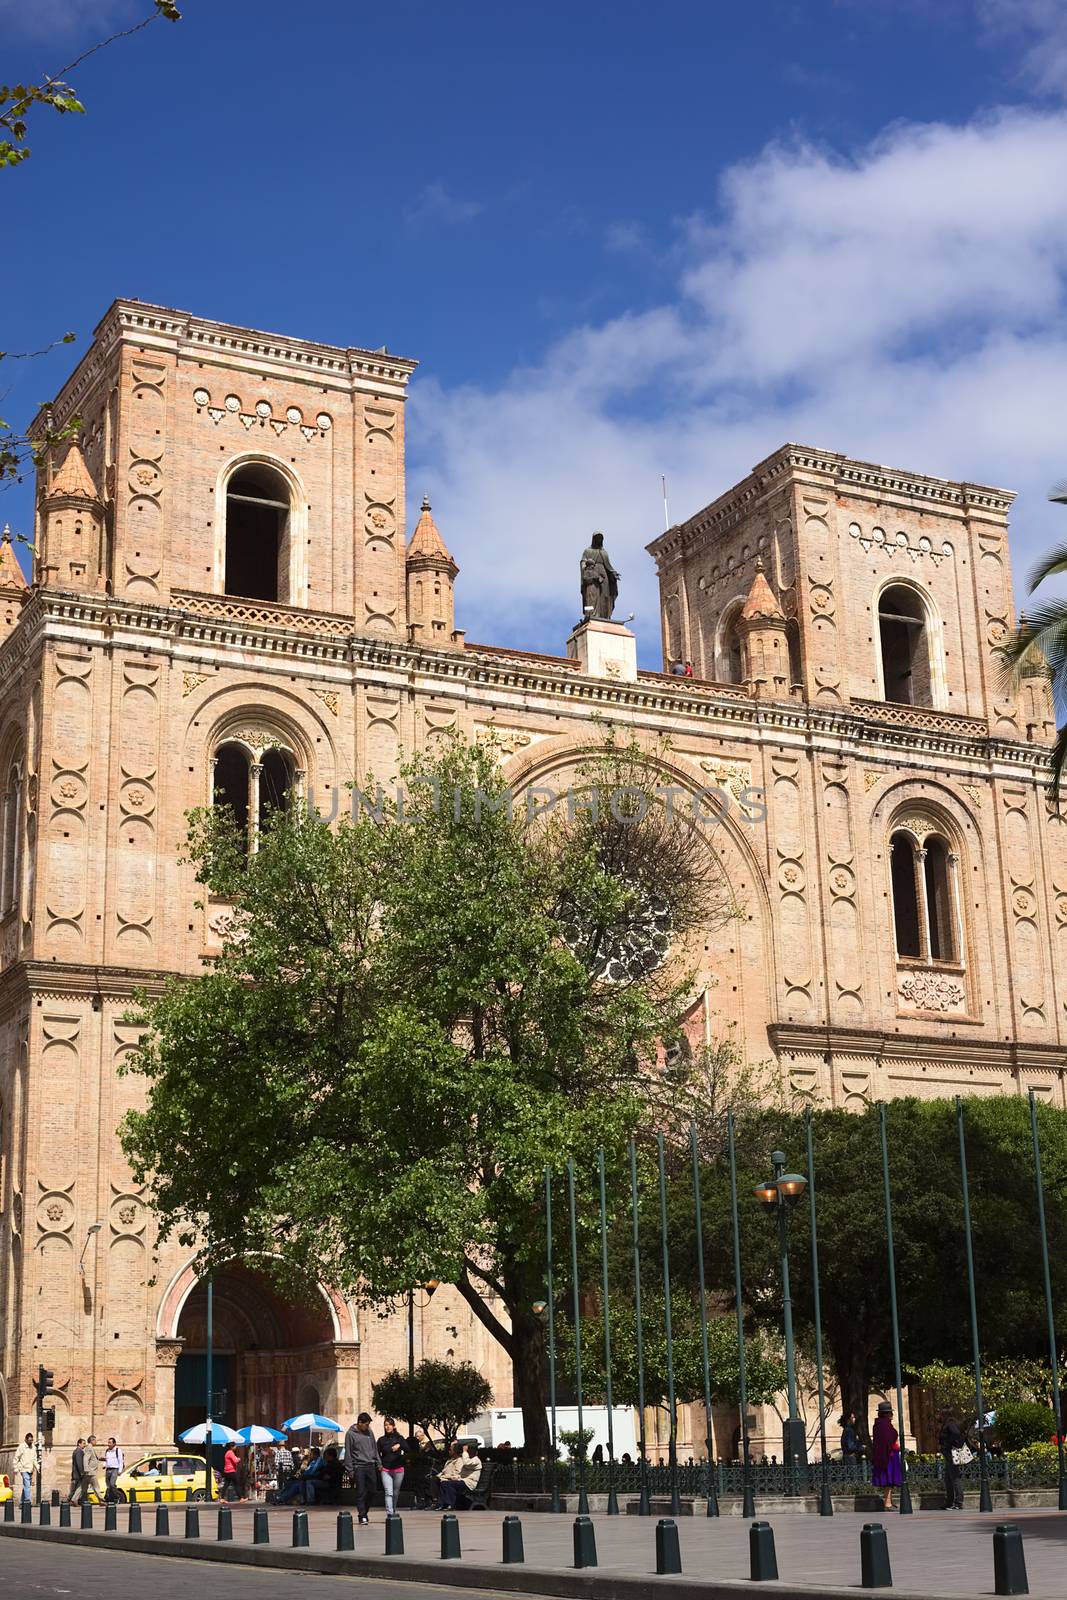 The New Cathedral of Cuenca, Ecuador by ildi